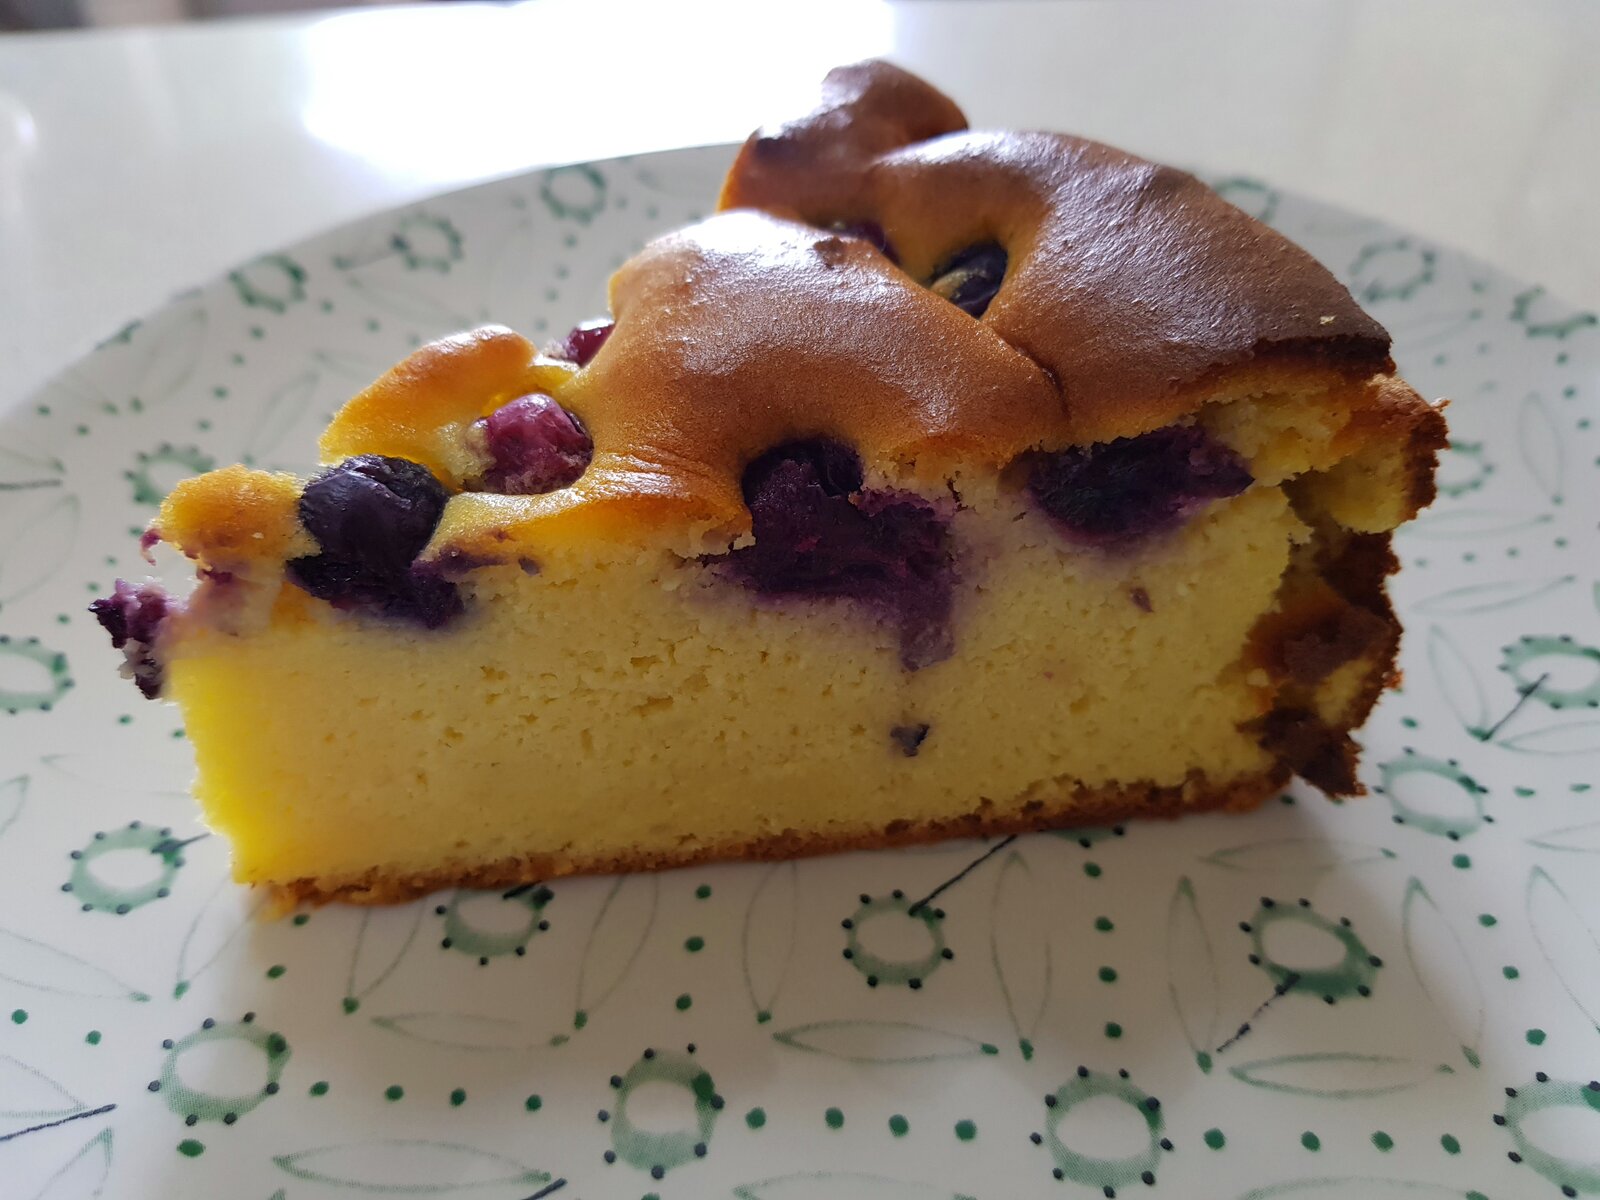 A Slice of Blueberry & Vanilla Potato Cake